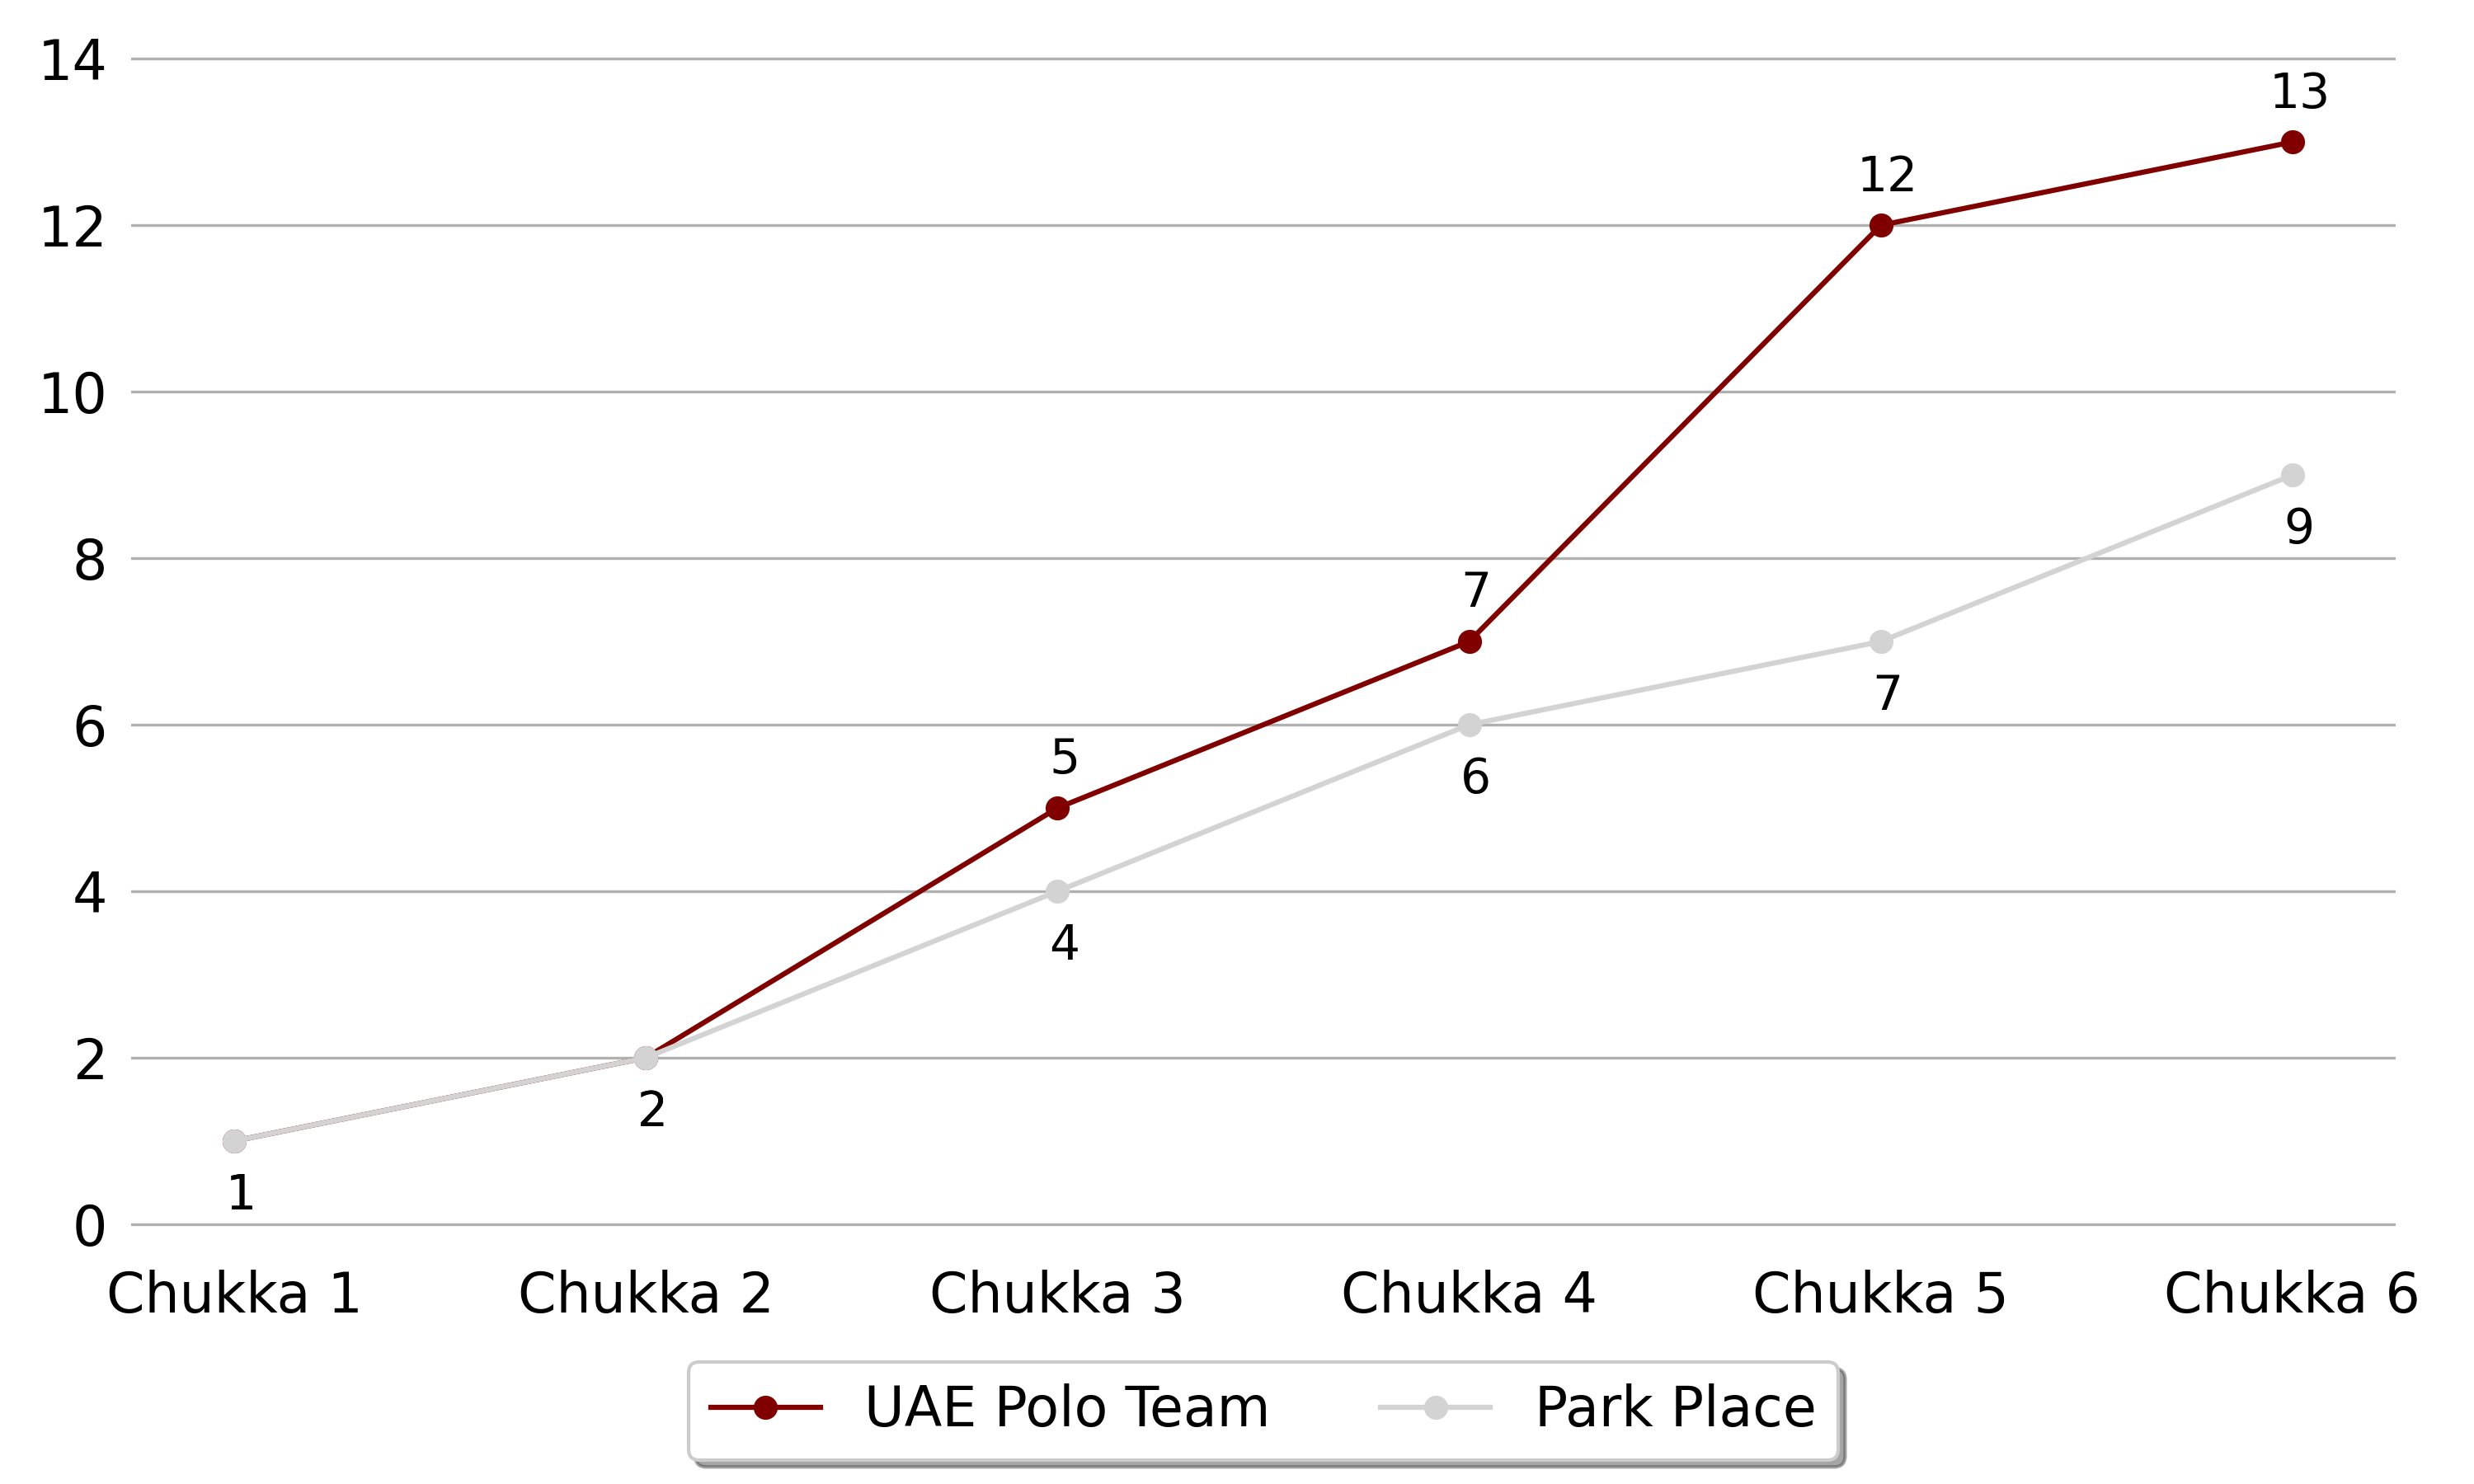 UAE Polo Team won against Park Place5